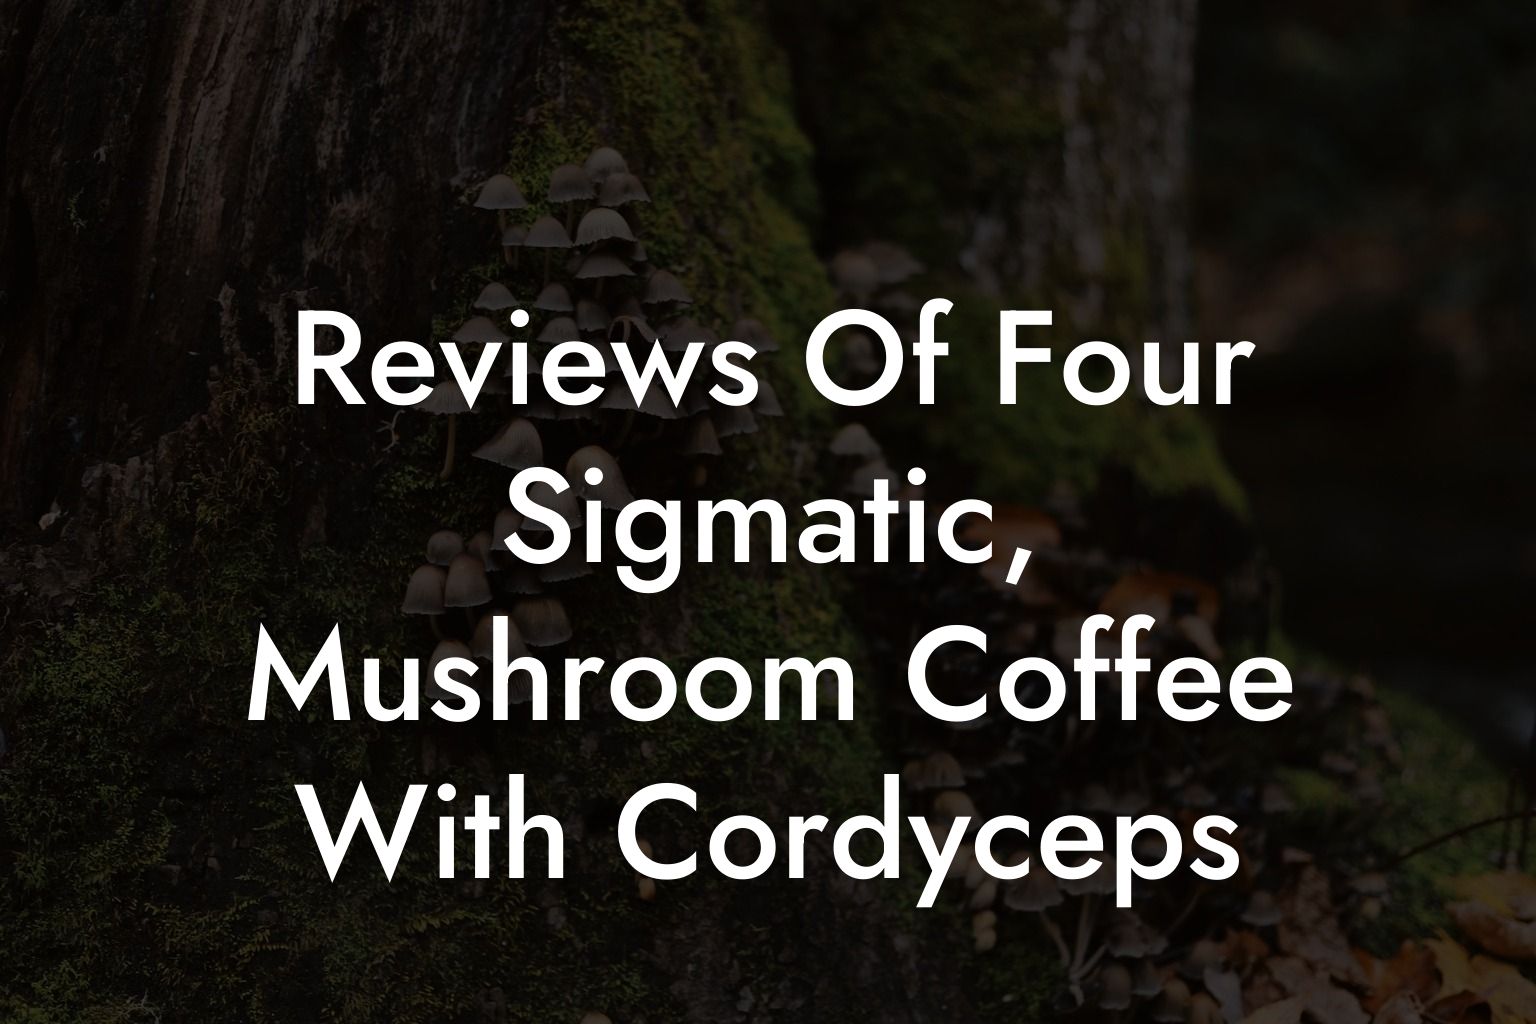 Reviews Of Four Sigmatic, Mushroom Coffee With Cordyceps